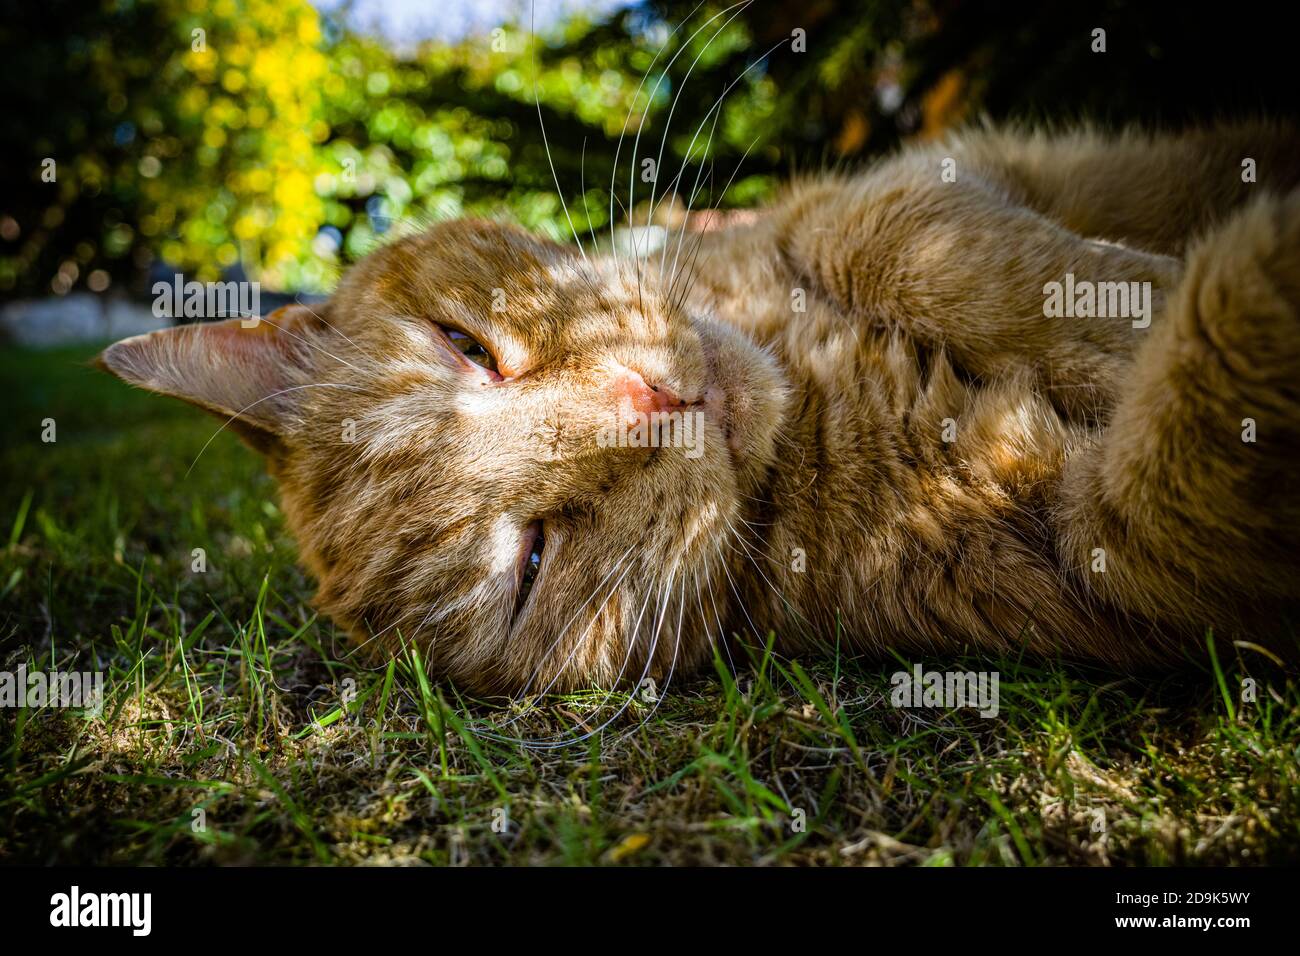 Ginger-tom-Katze ruht in einem Garten in South Wales UK Stockfoto